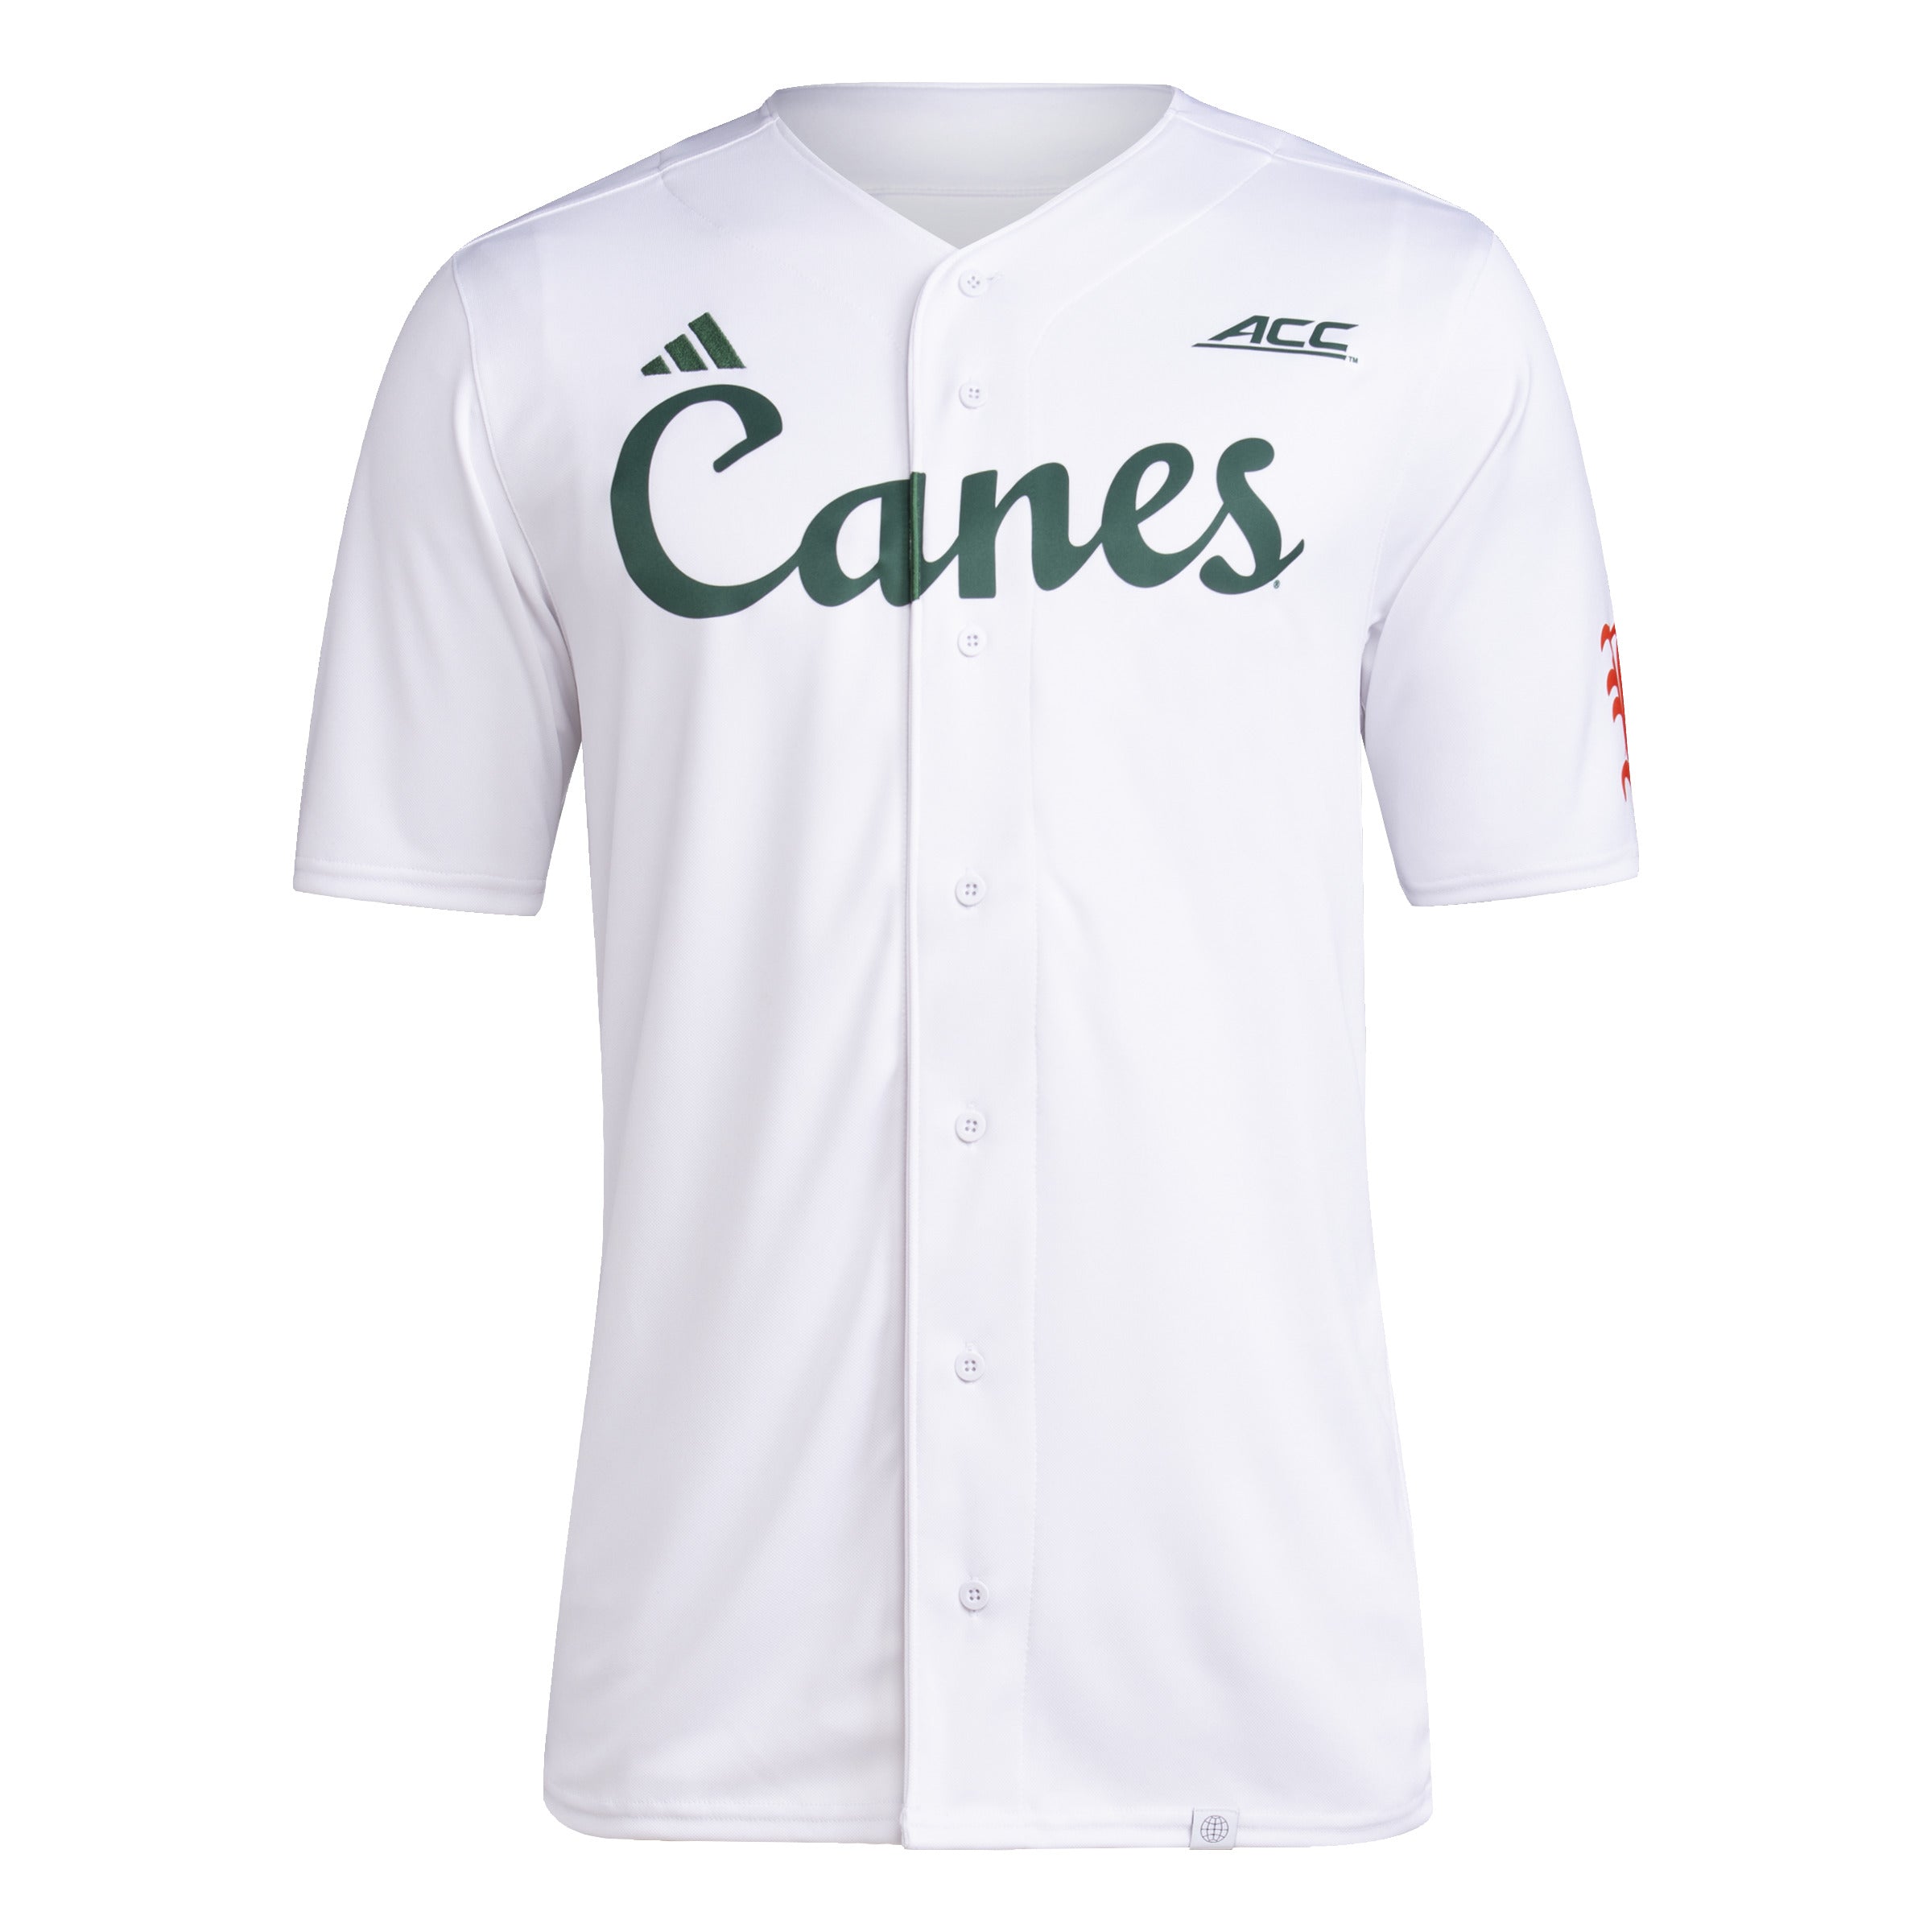 Miami Hurricanes Baseball on X: Ronnie set the tone 😤 3⃣ IP